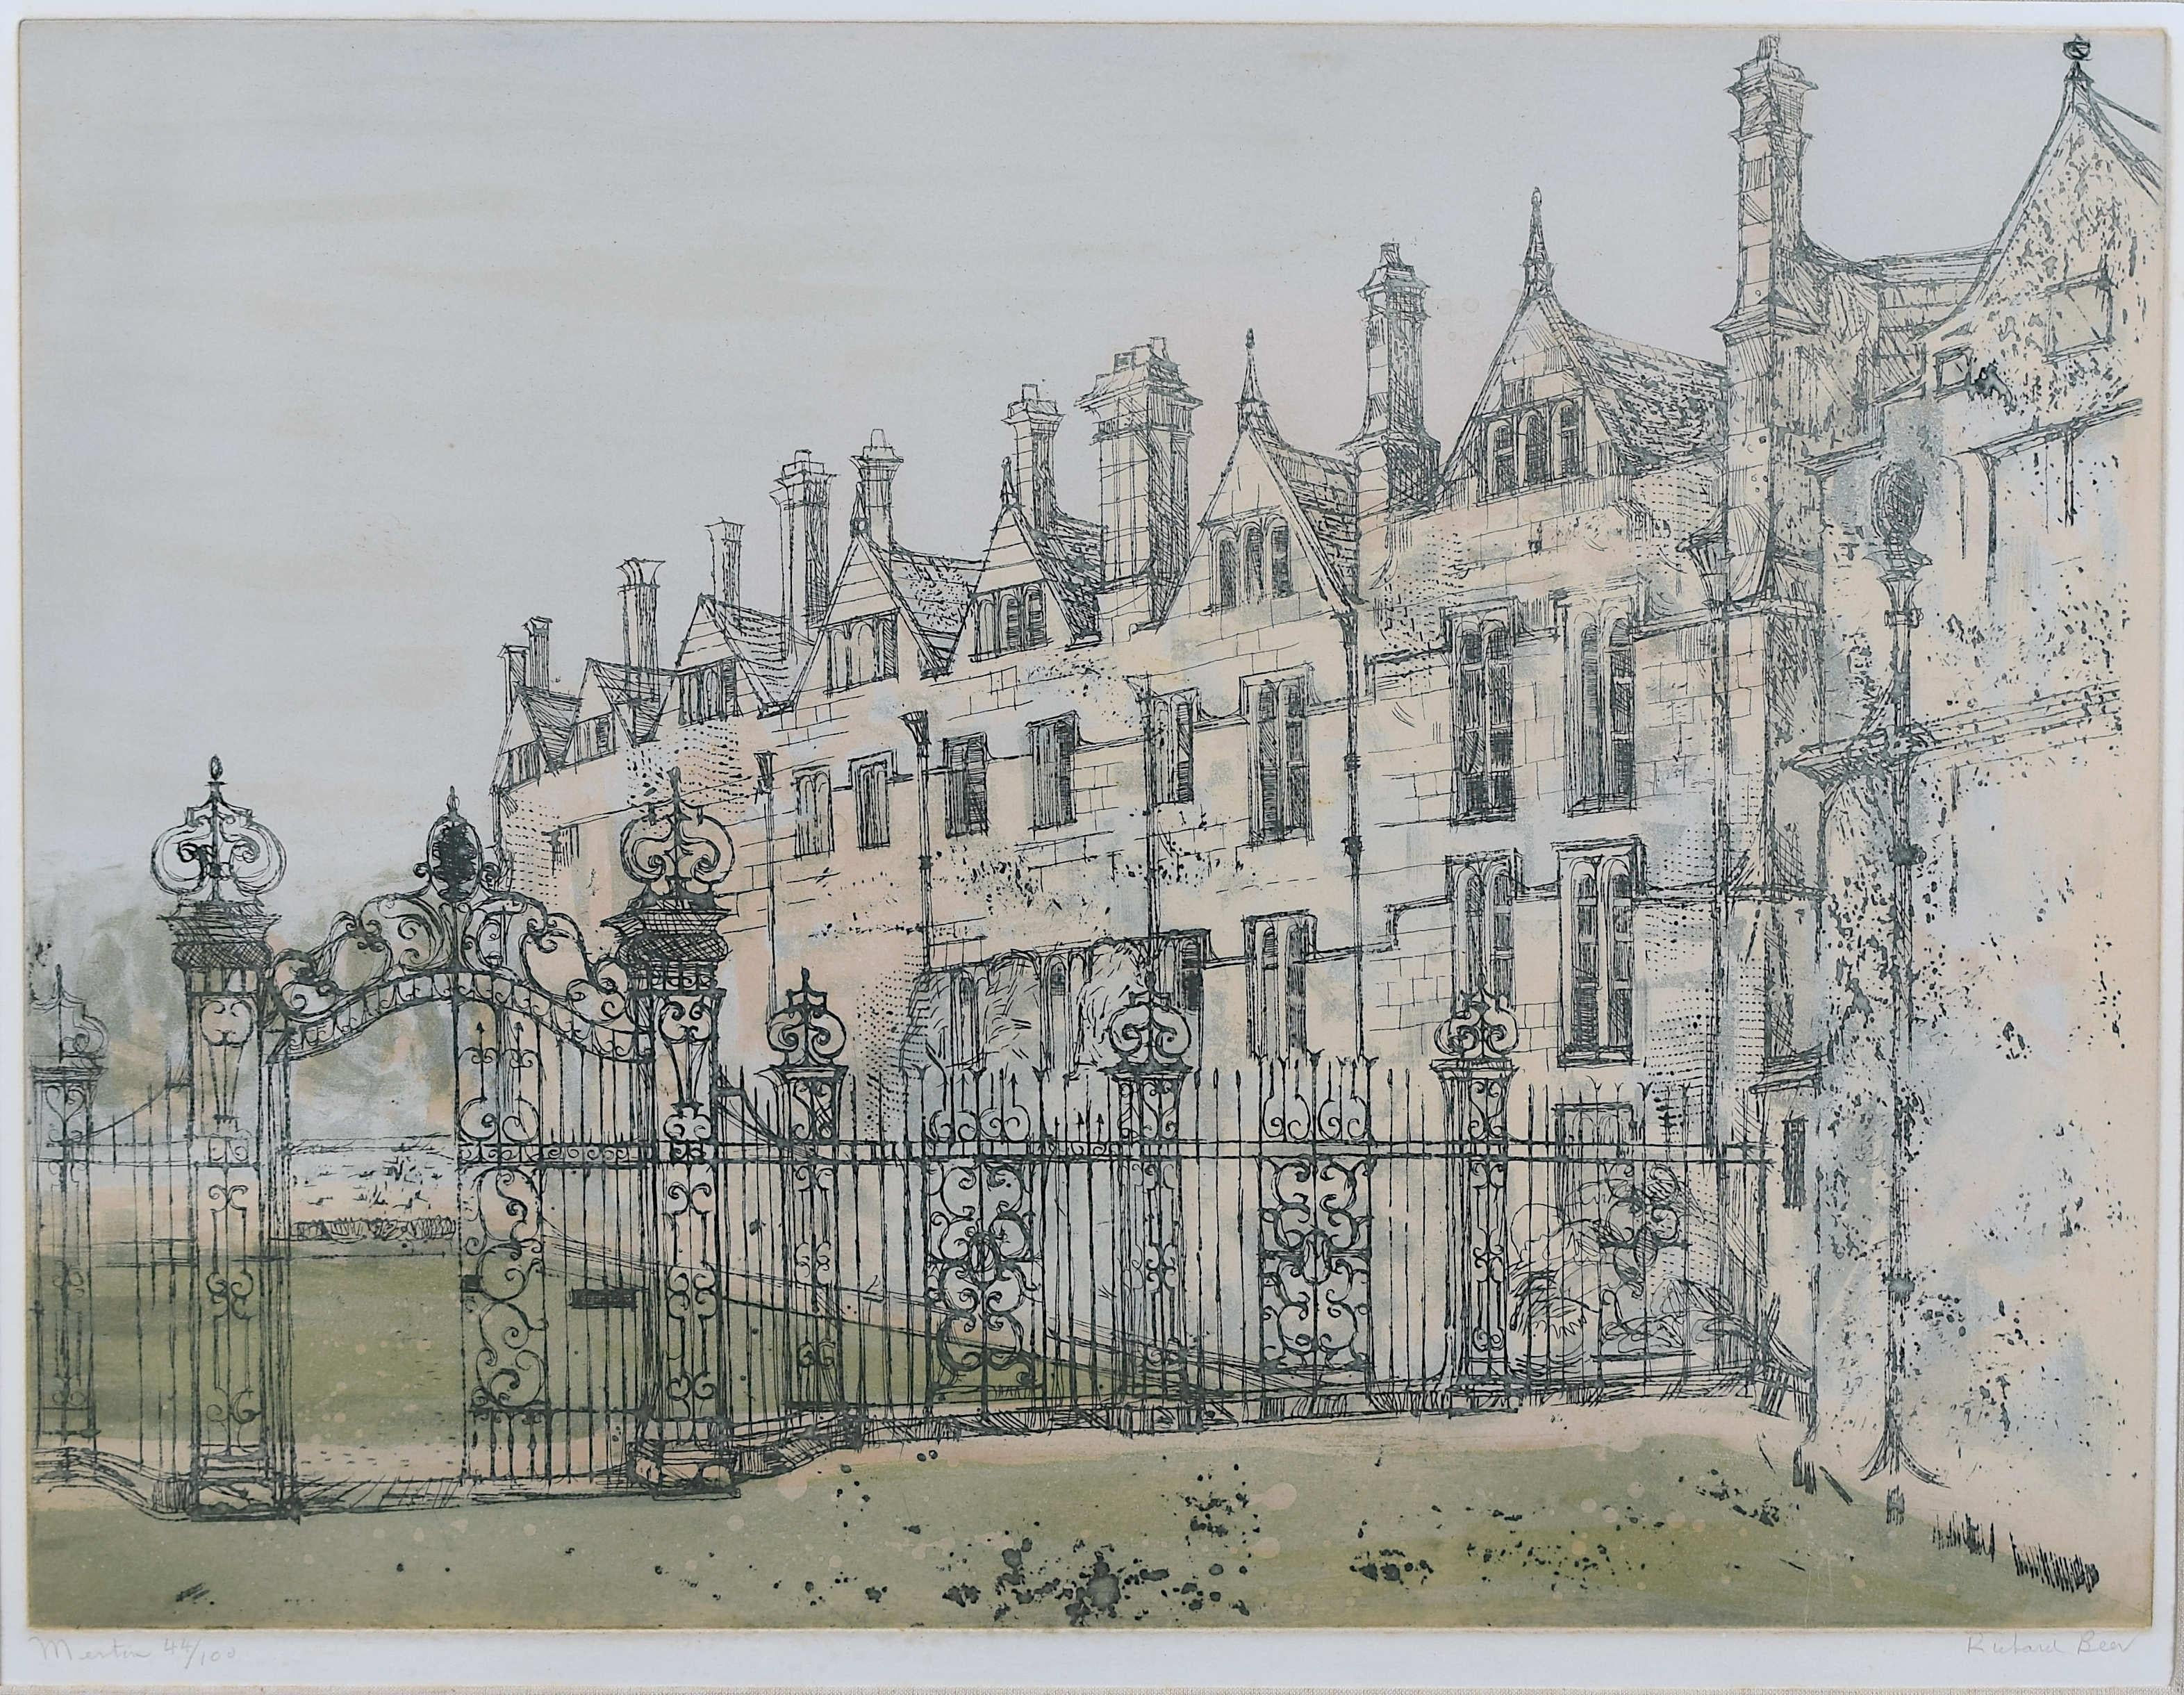 Richard Beer: Merton College, Oxford etching